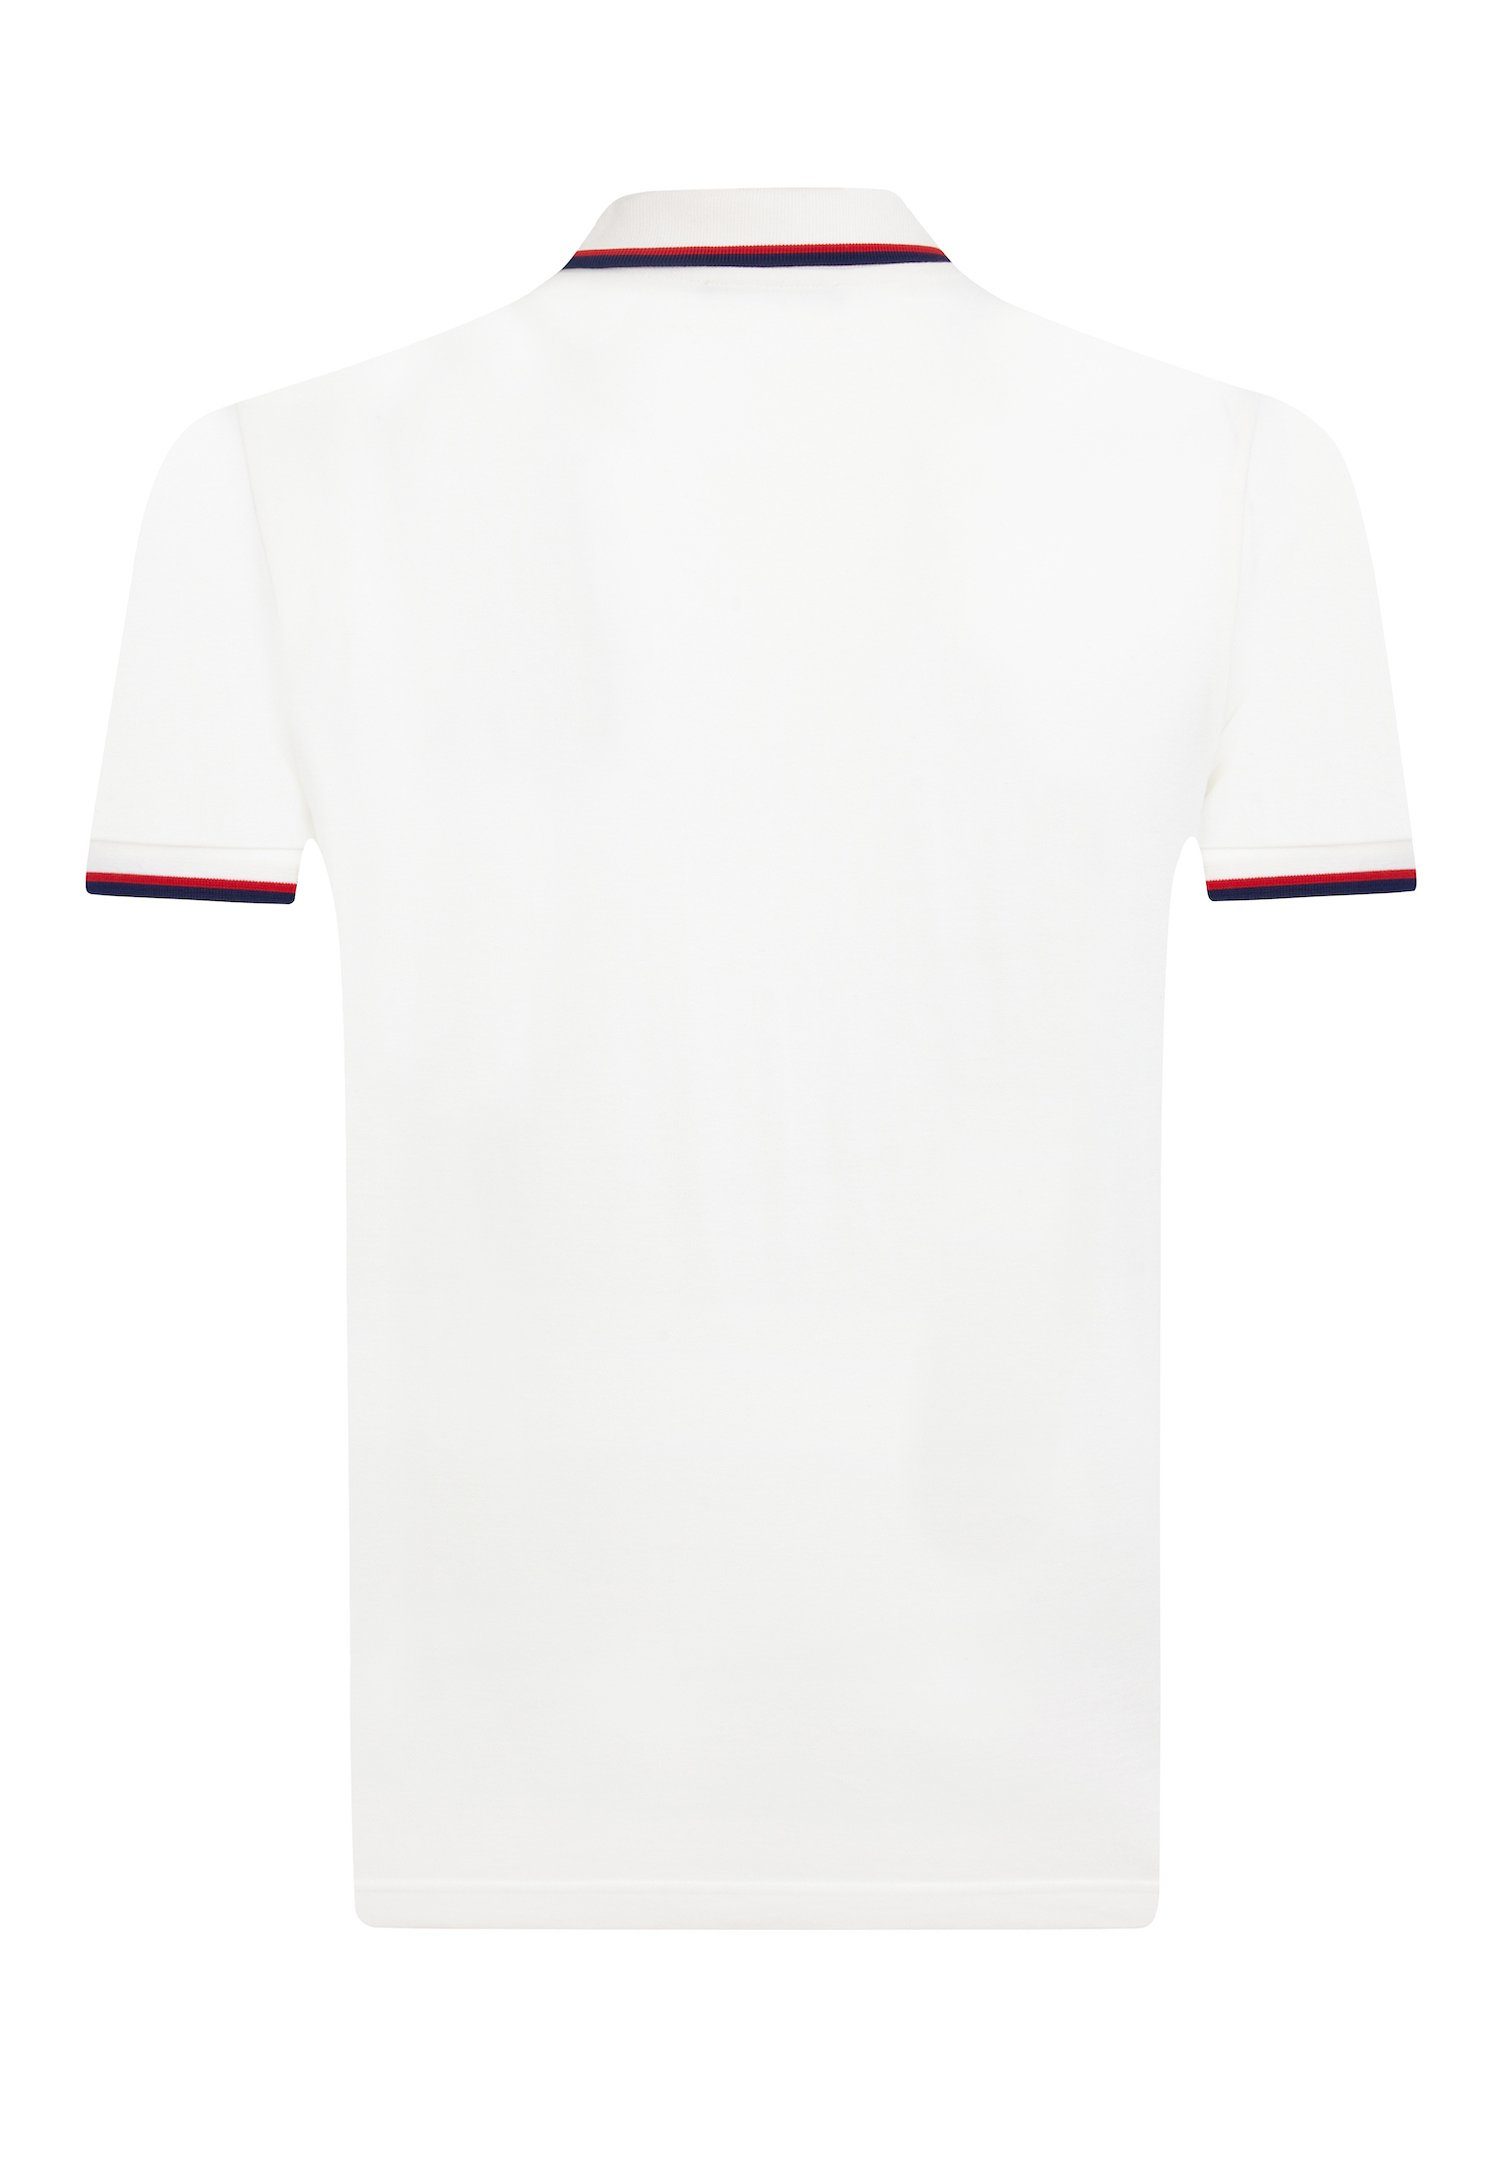 Sir Raymond Tailor Poloshirt Amsterdam White-Red